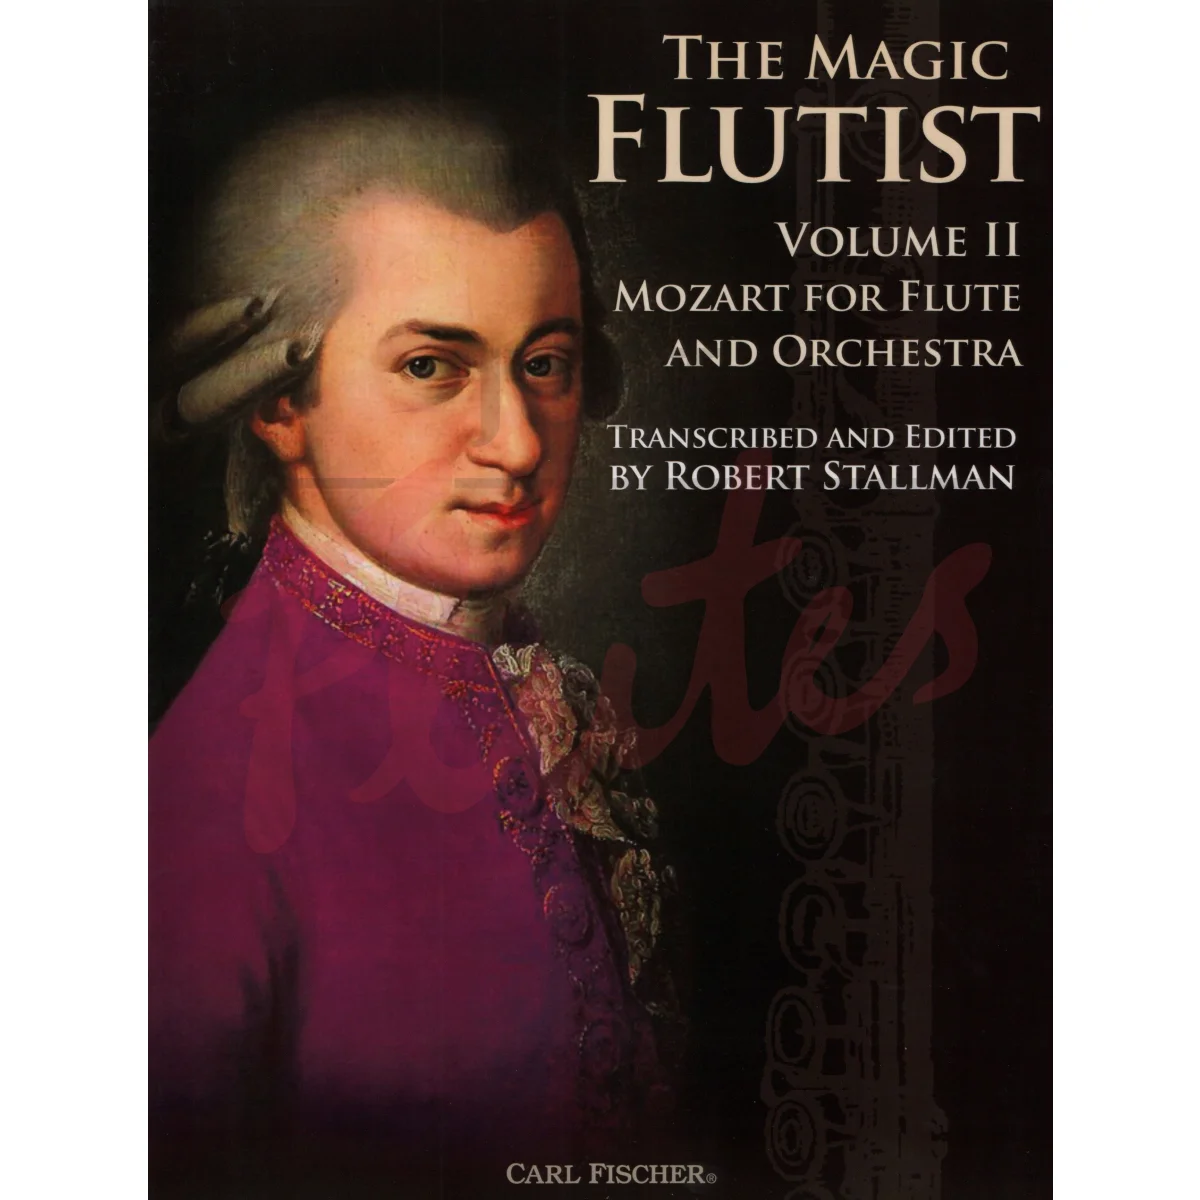 The Magic Flutist Vol. 2: Mozart for Flute and Orchestra